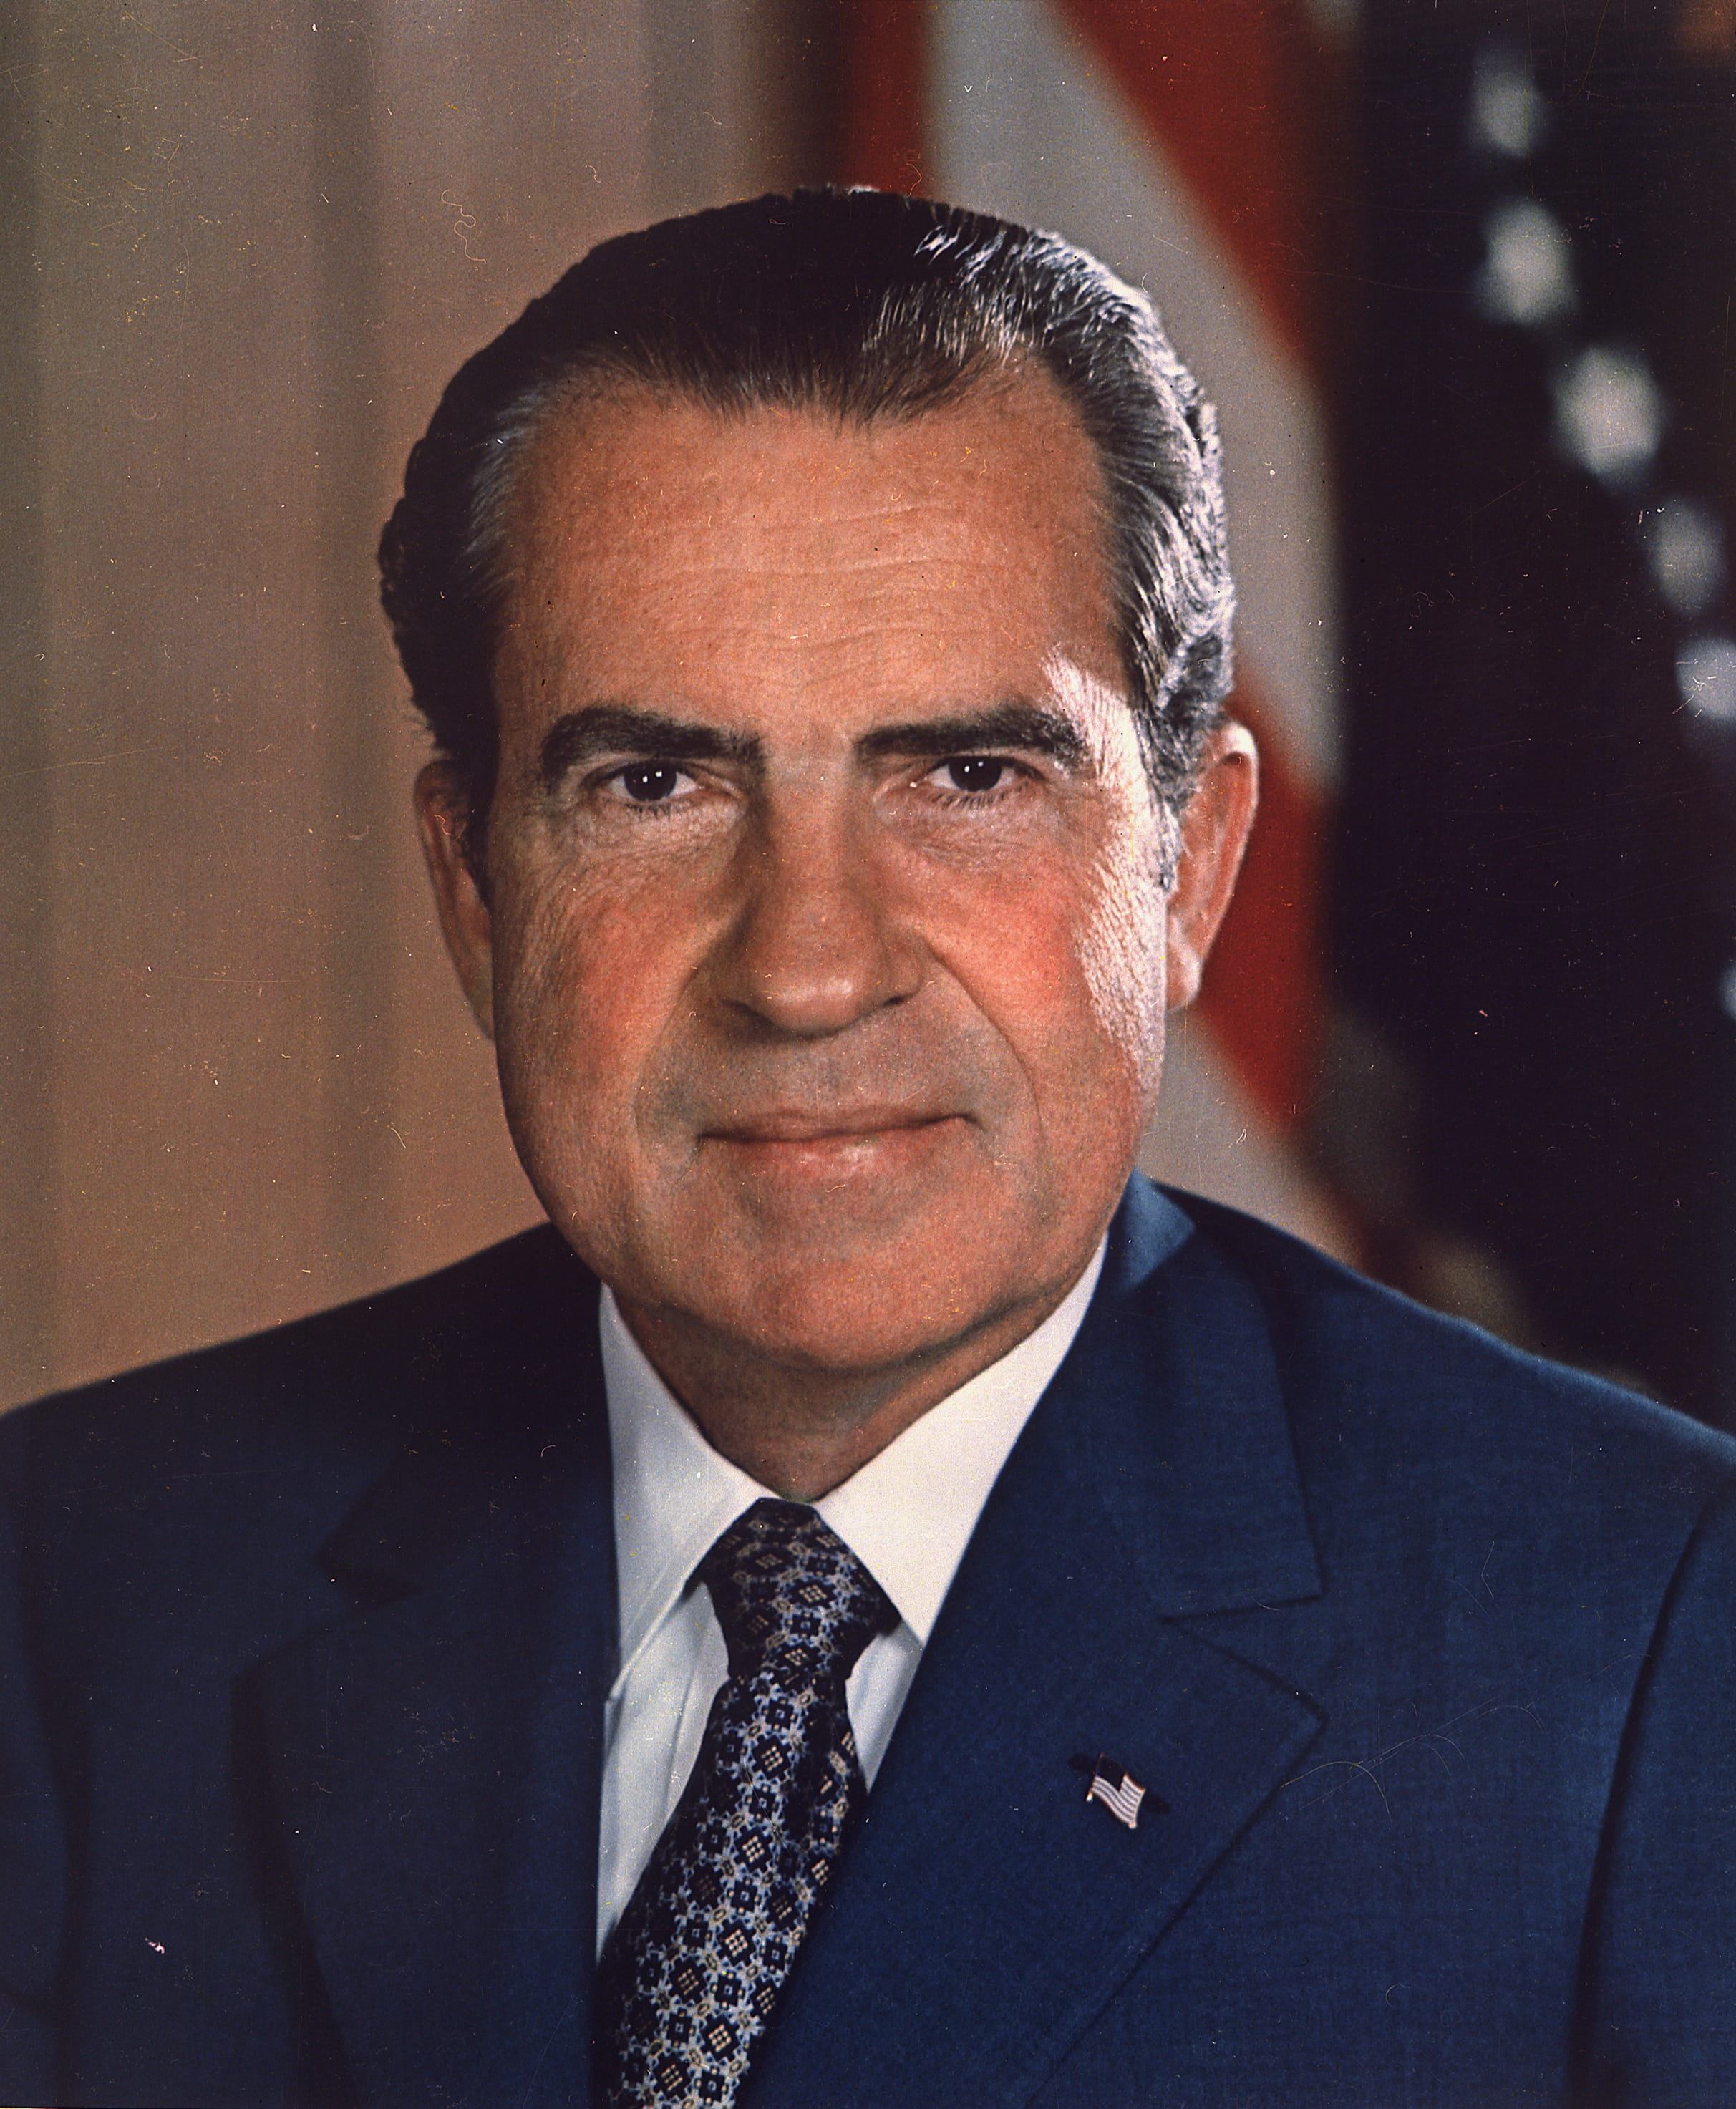 Richard Nixon Photo, portrait, president, public domain, men